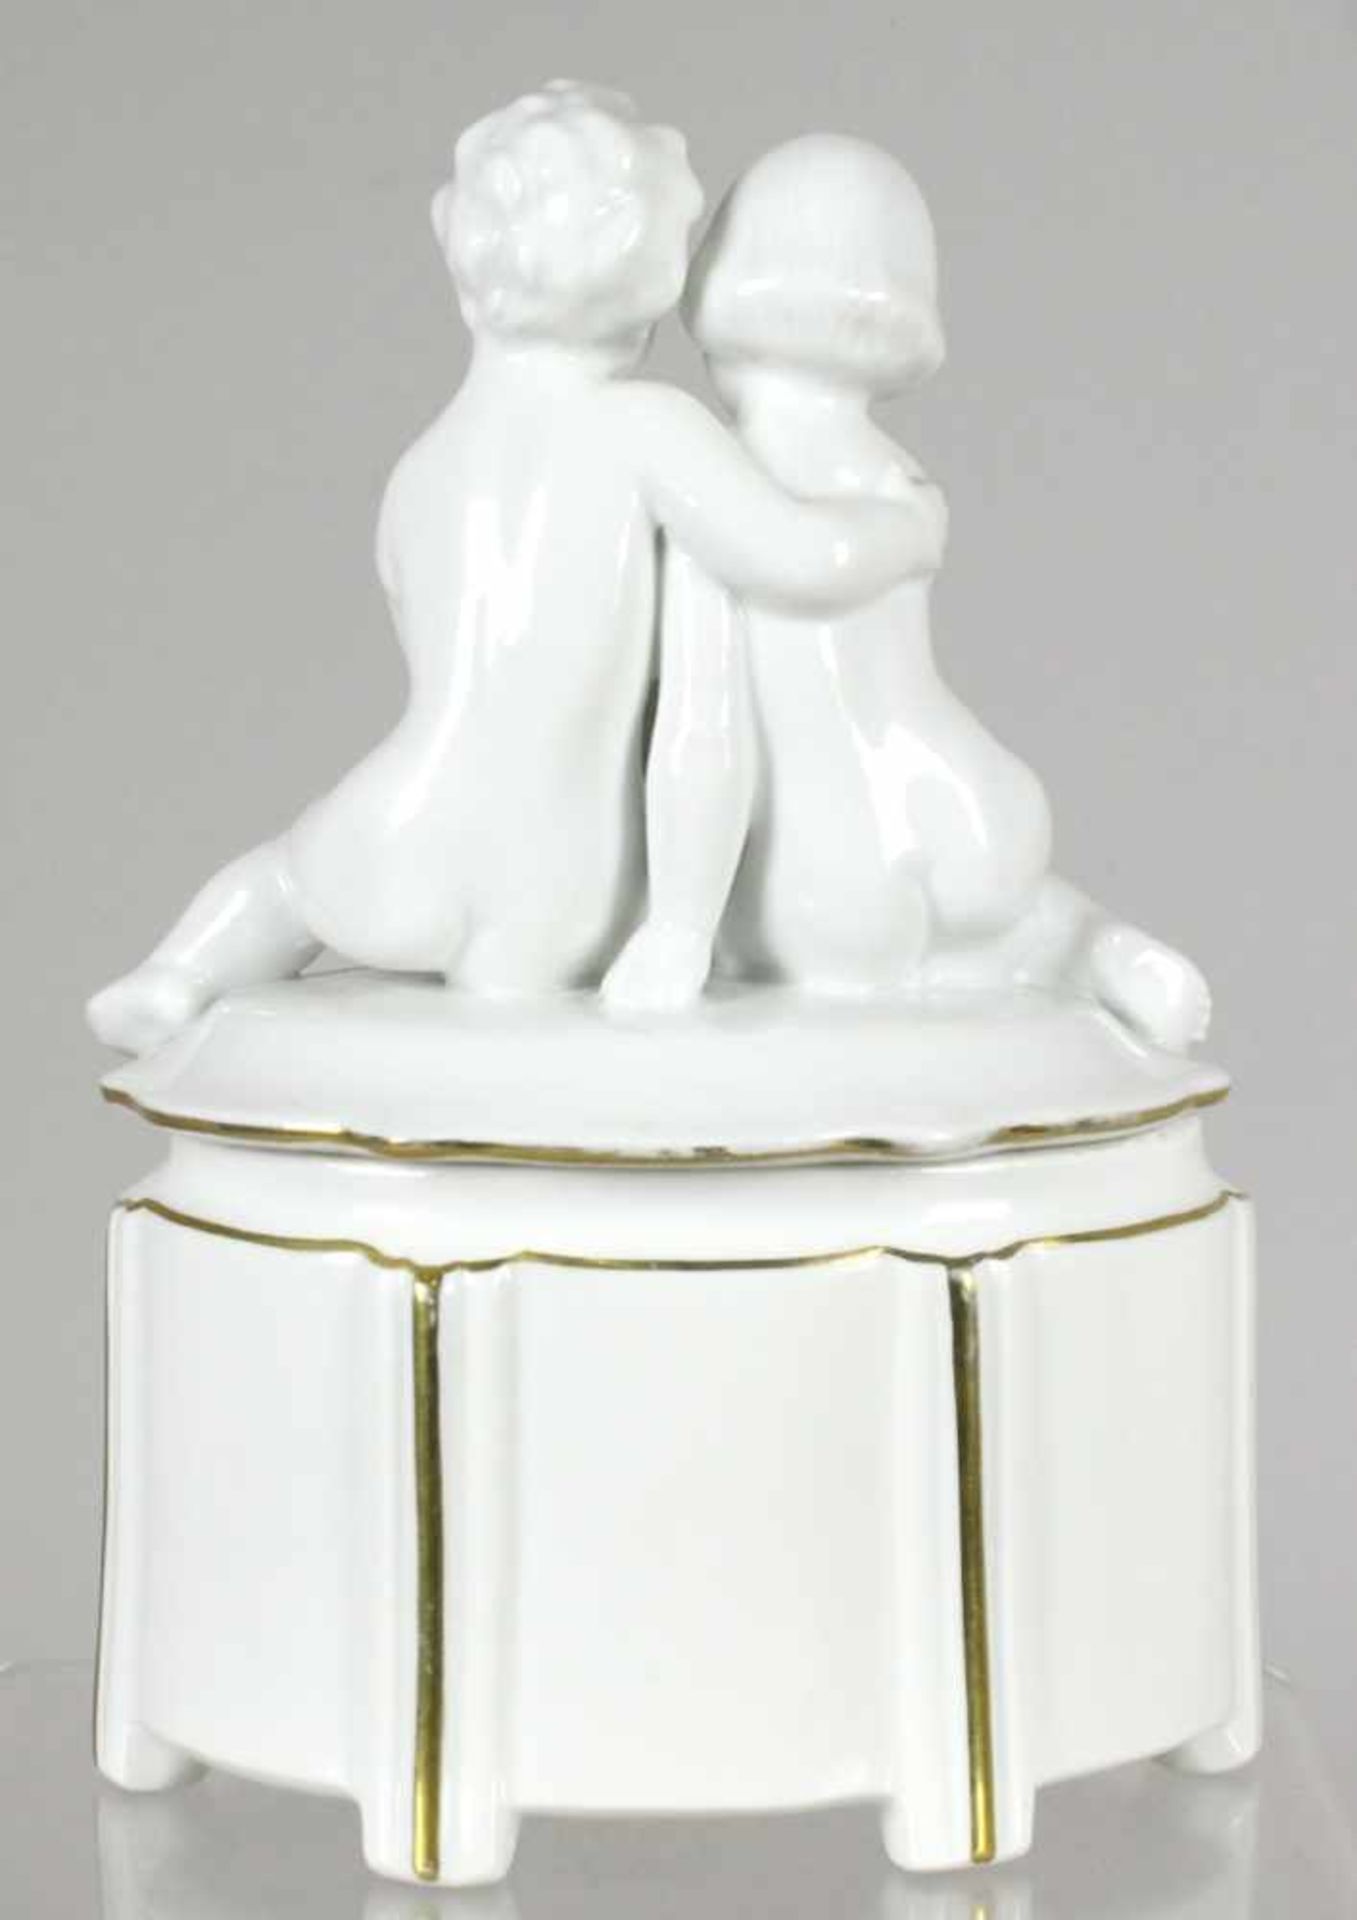 Porzellan-Deckeldose, "Kinderpaar", Neue Porzellanfabrik Tettau, um 1927-37, Mod.nr.:28..A, - Bild 2 aus 3